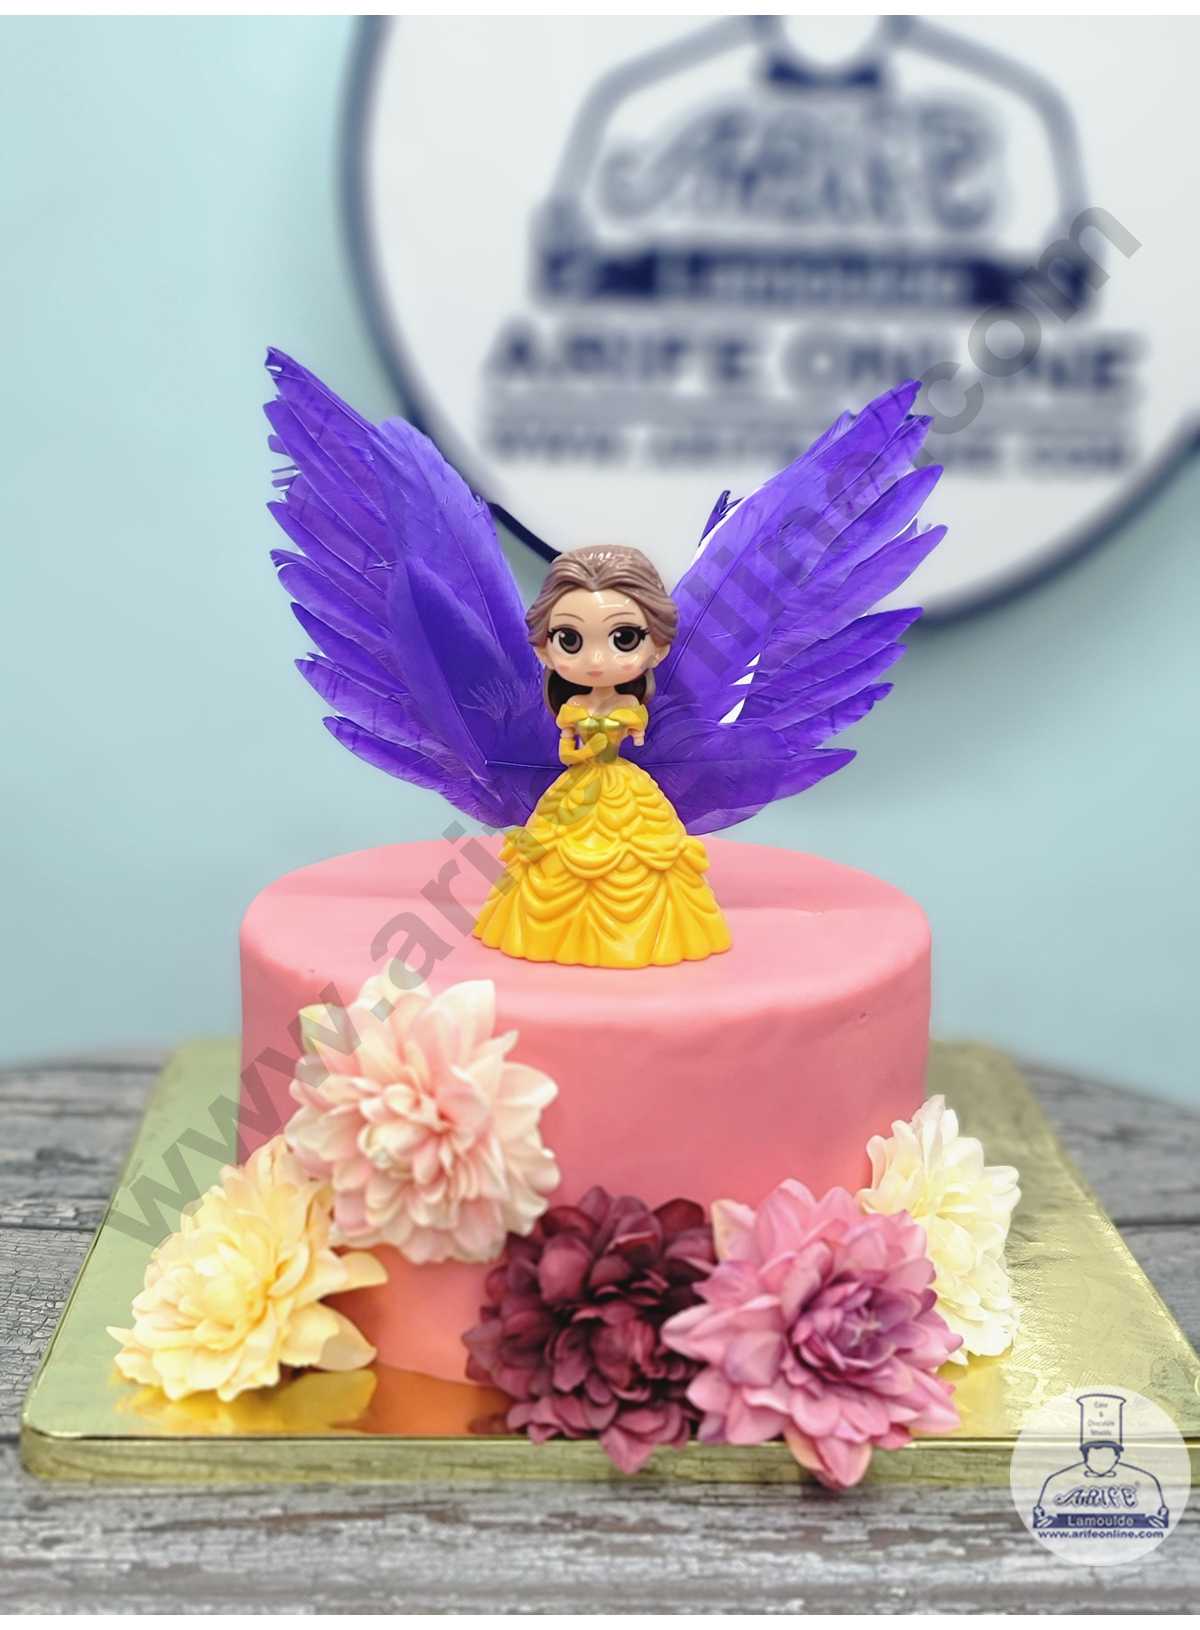 BUSOHA Minnie Cake Topper, Happy Birthday Cake Topper, Minnie Mouse Theme  Party Cake Decor Birthday Party Supplies Decoration for Baby Girl Boys :  Amazon.ae: Grocery